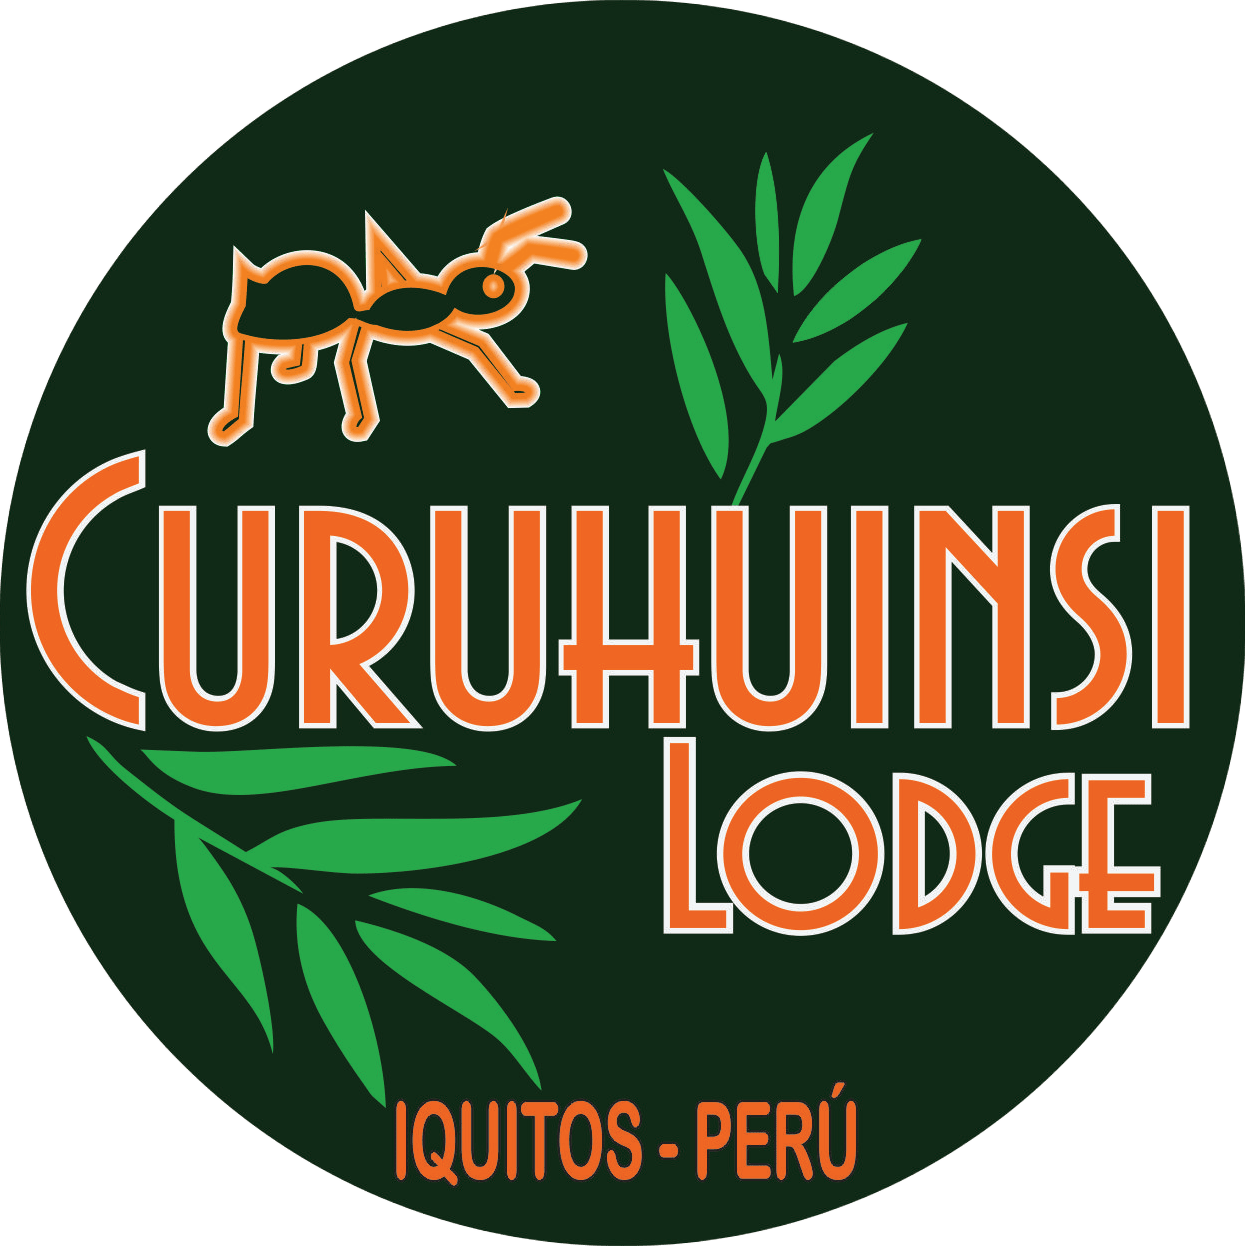 Curuhuinsi Lodge amazon jungle tours logo in Iquitos Peru